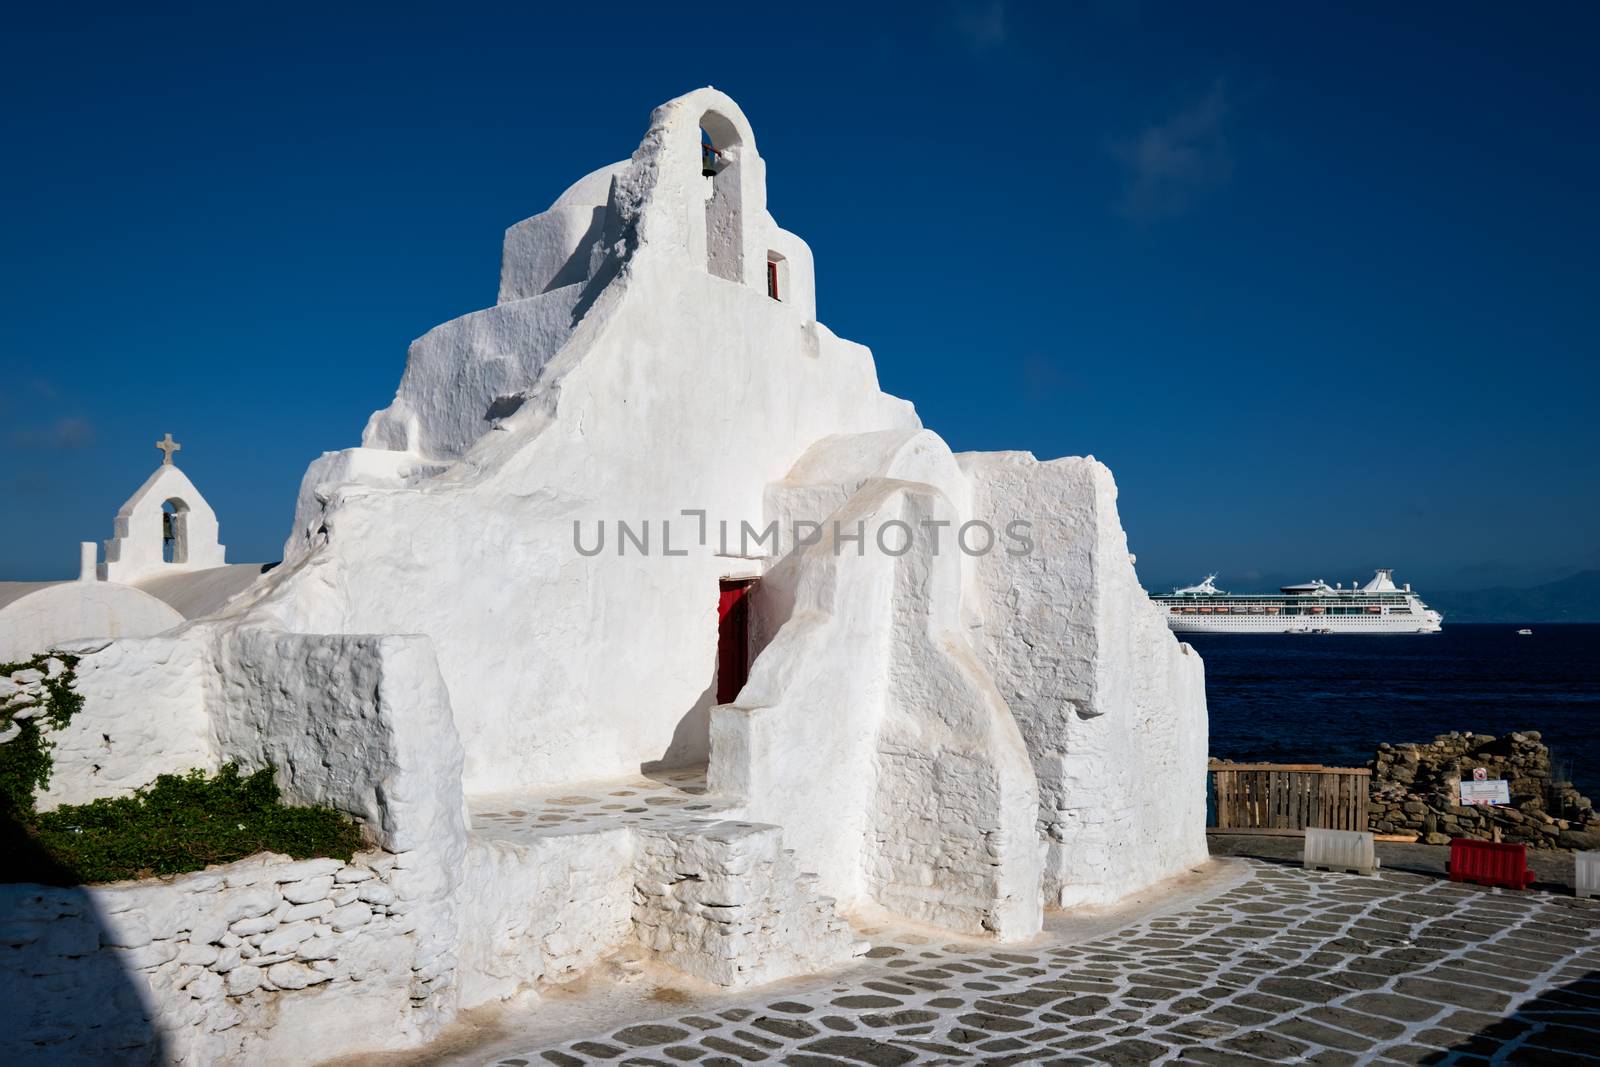 Greek Orthodox Church of Panagia Paraportiani in town of Chora on Mykonos island by dimol